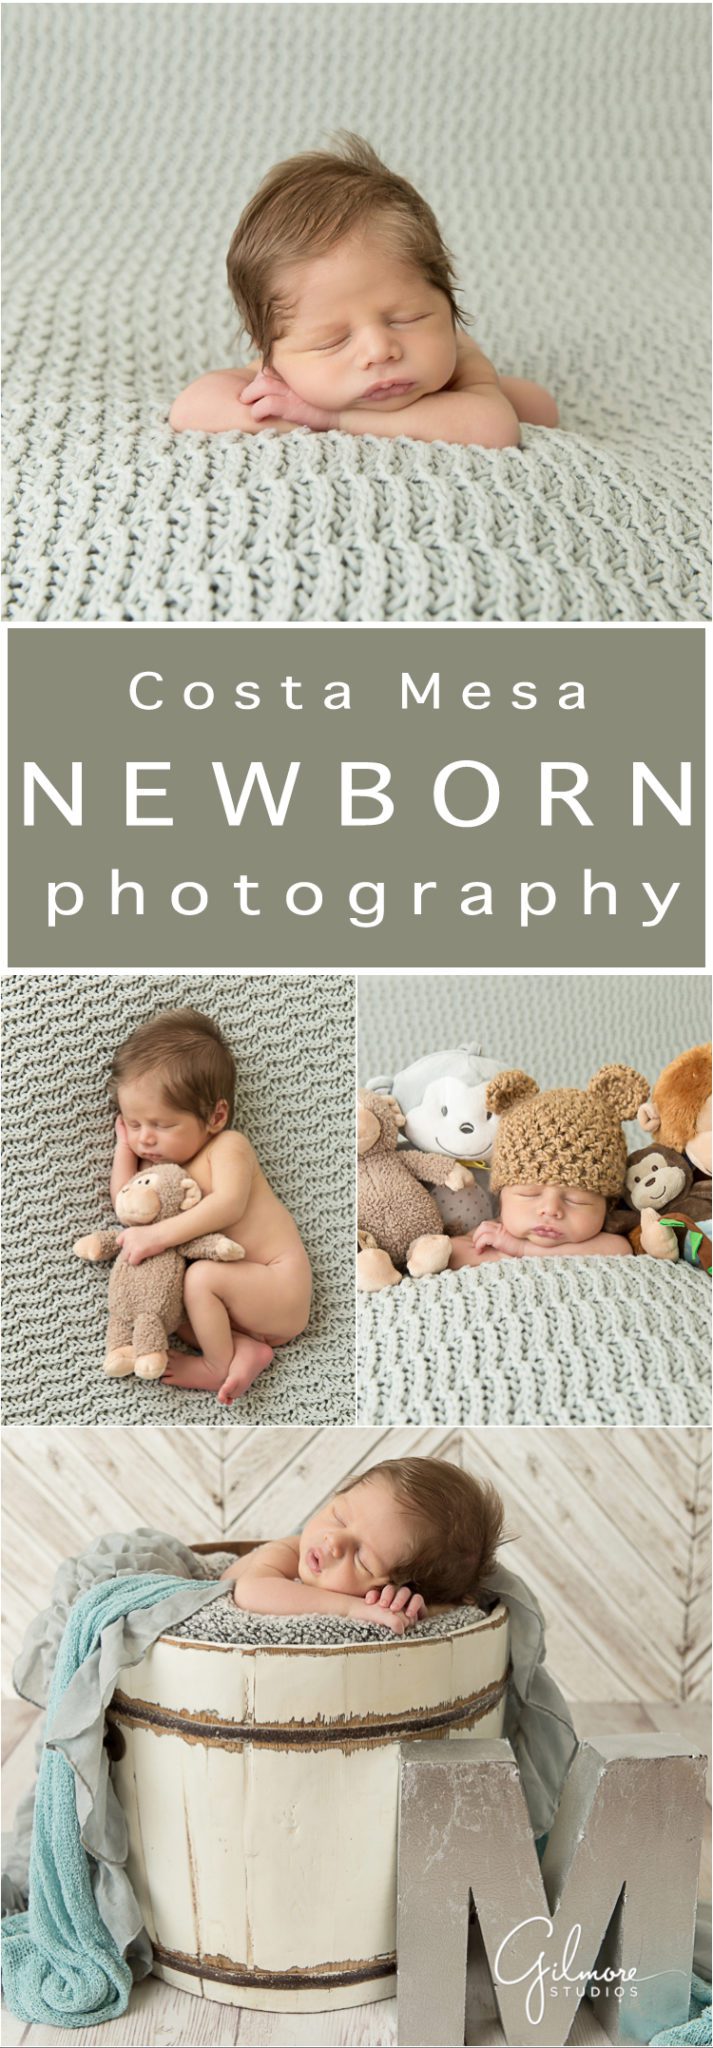 Newport Beach baby photography